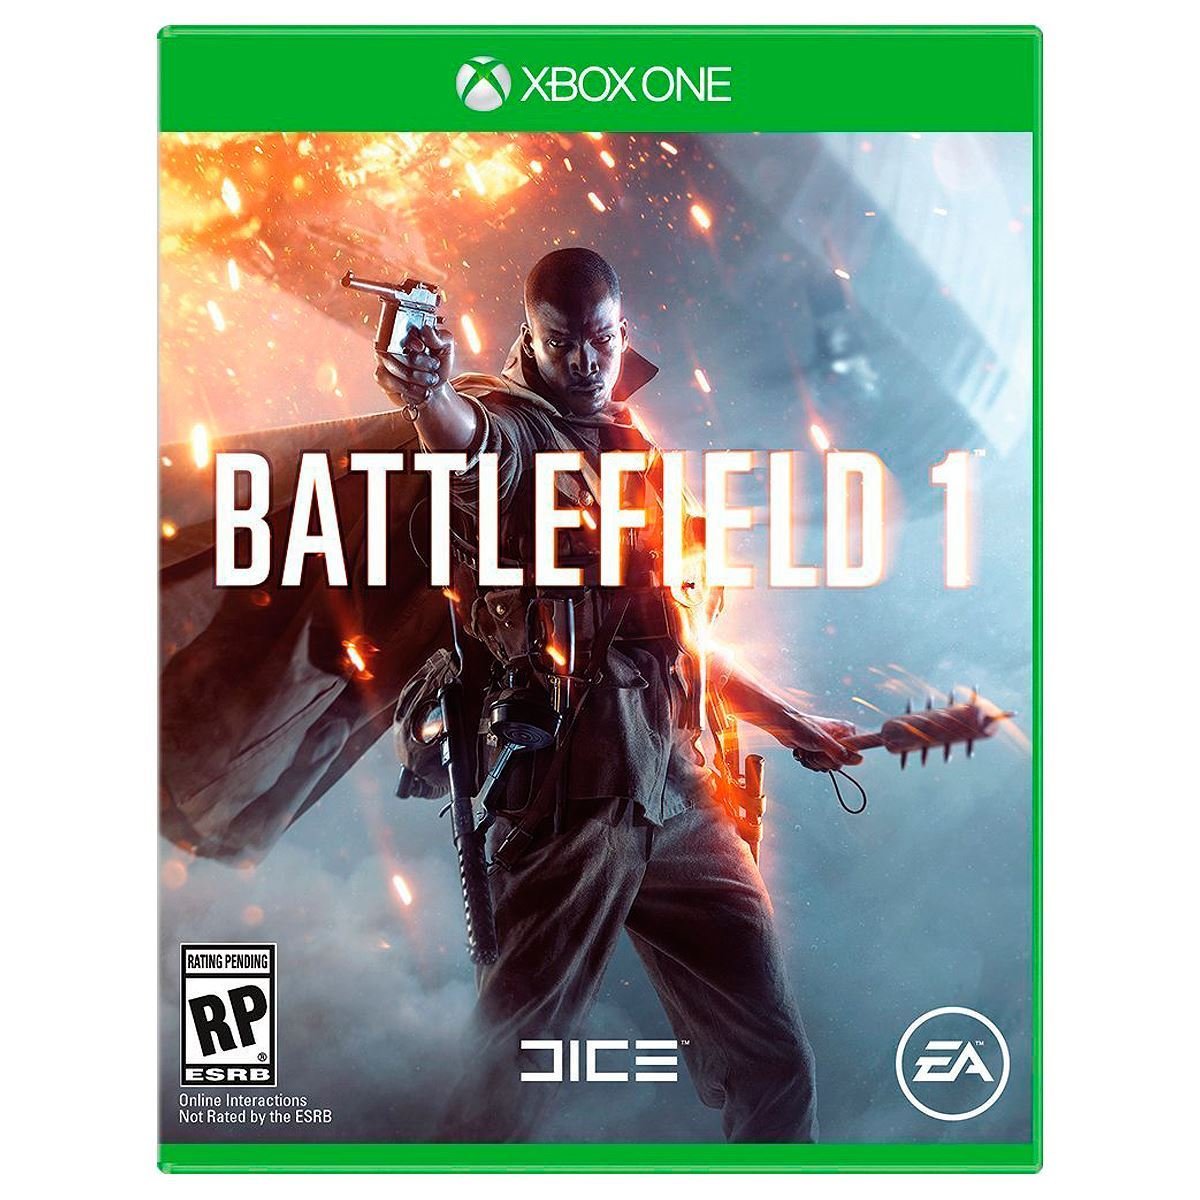 Consola Xbox ONE 500GB Battlefield 1